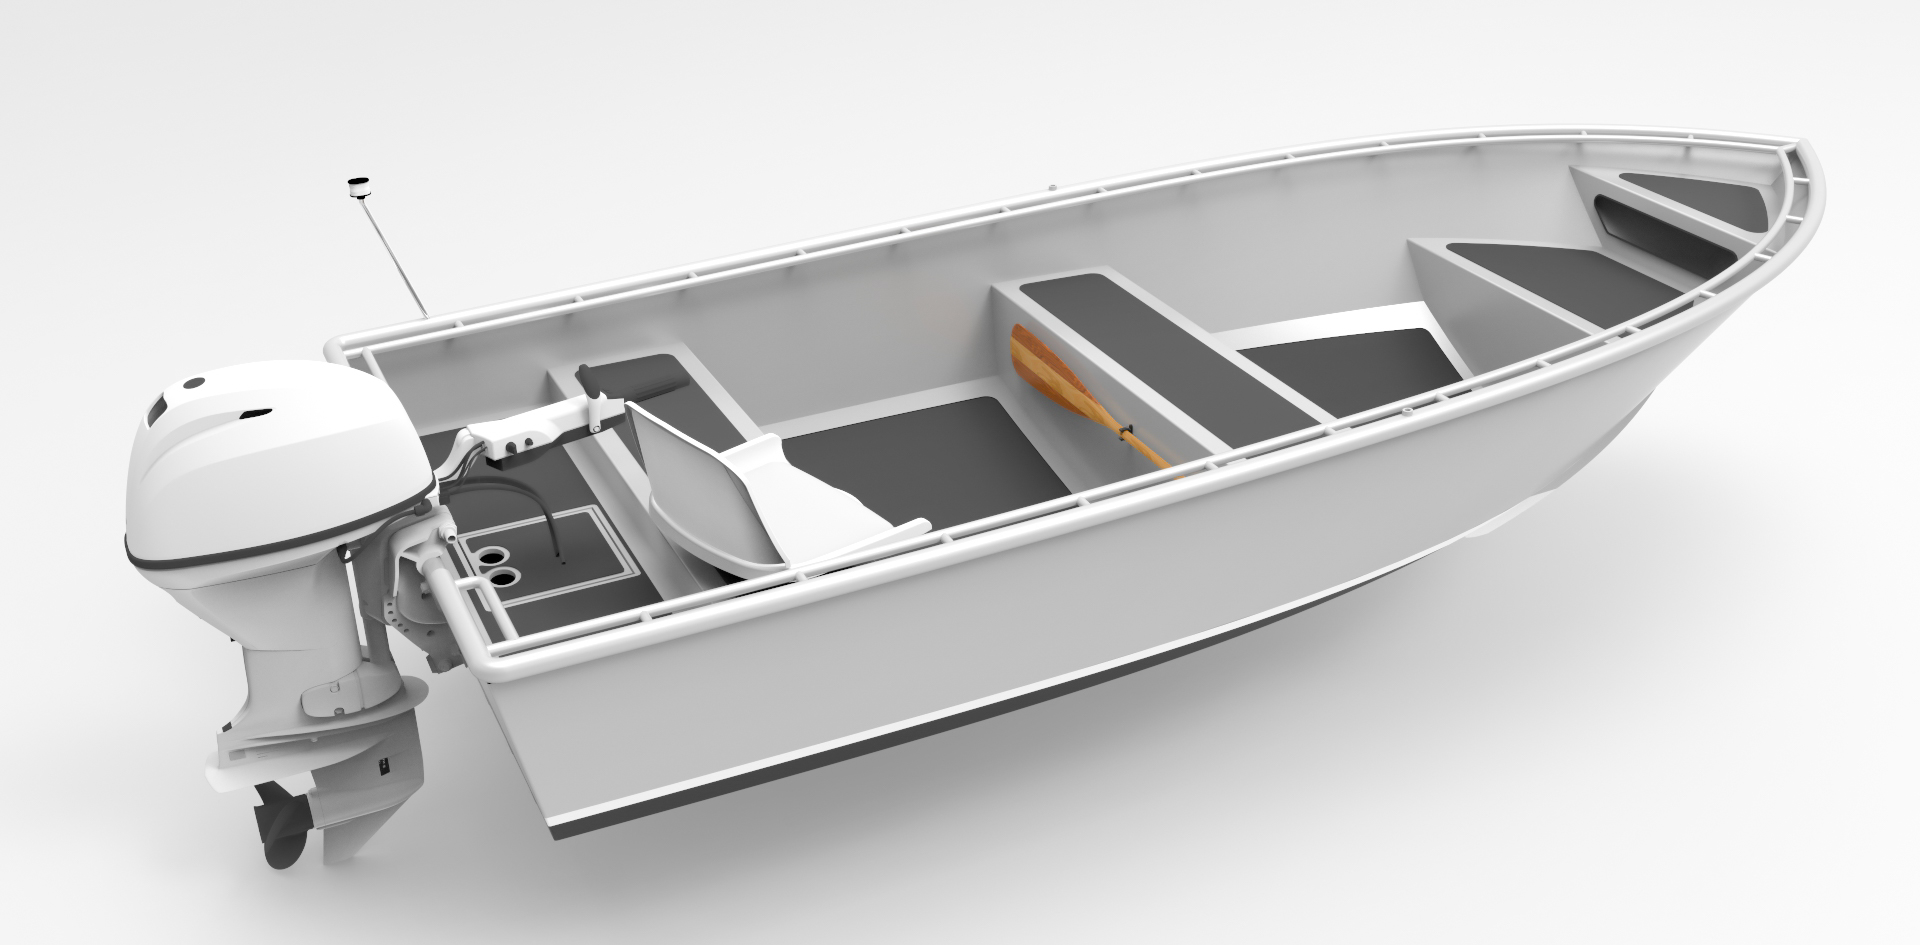 14 Foot (4m) Skiff - Utility - Metal Boat Kits